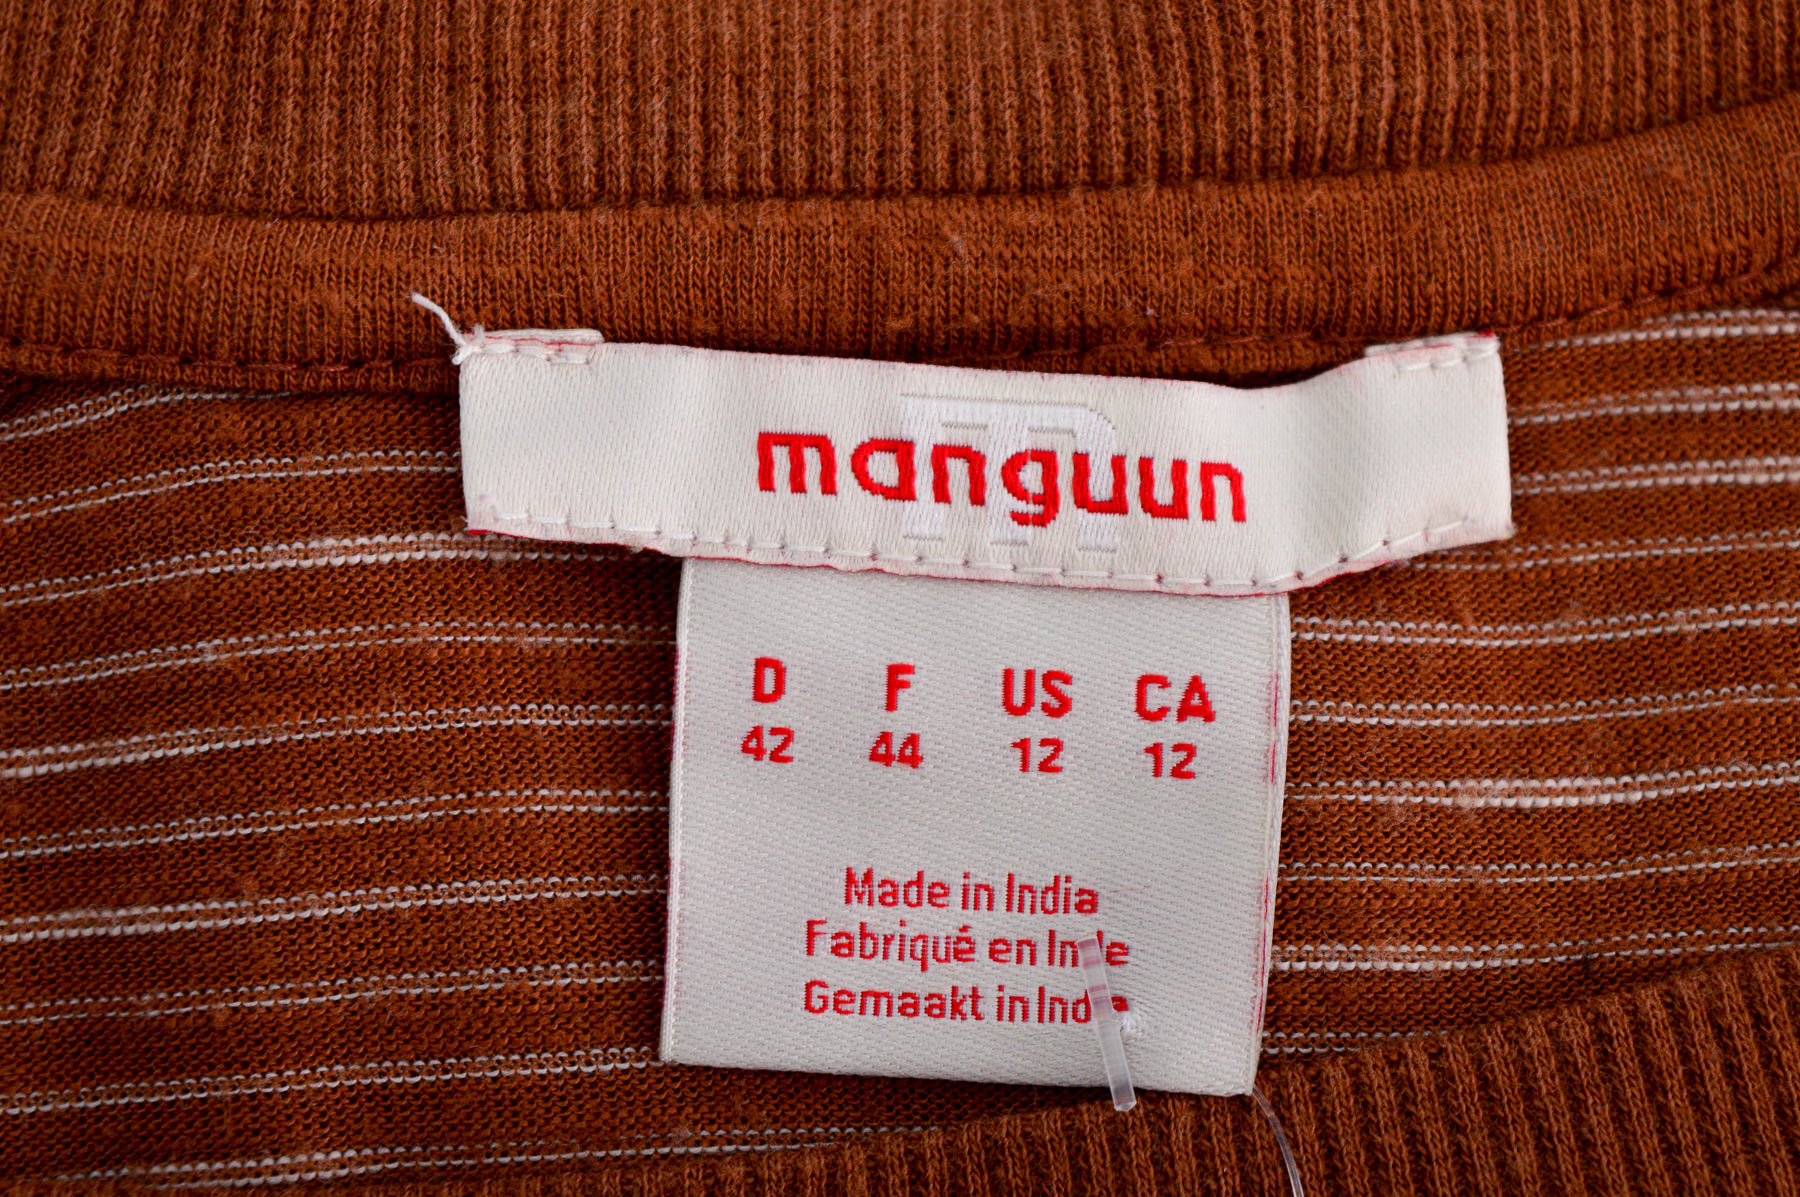 Bluza de damă - Manguun - 2